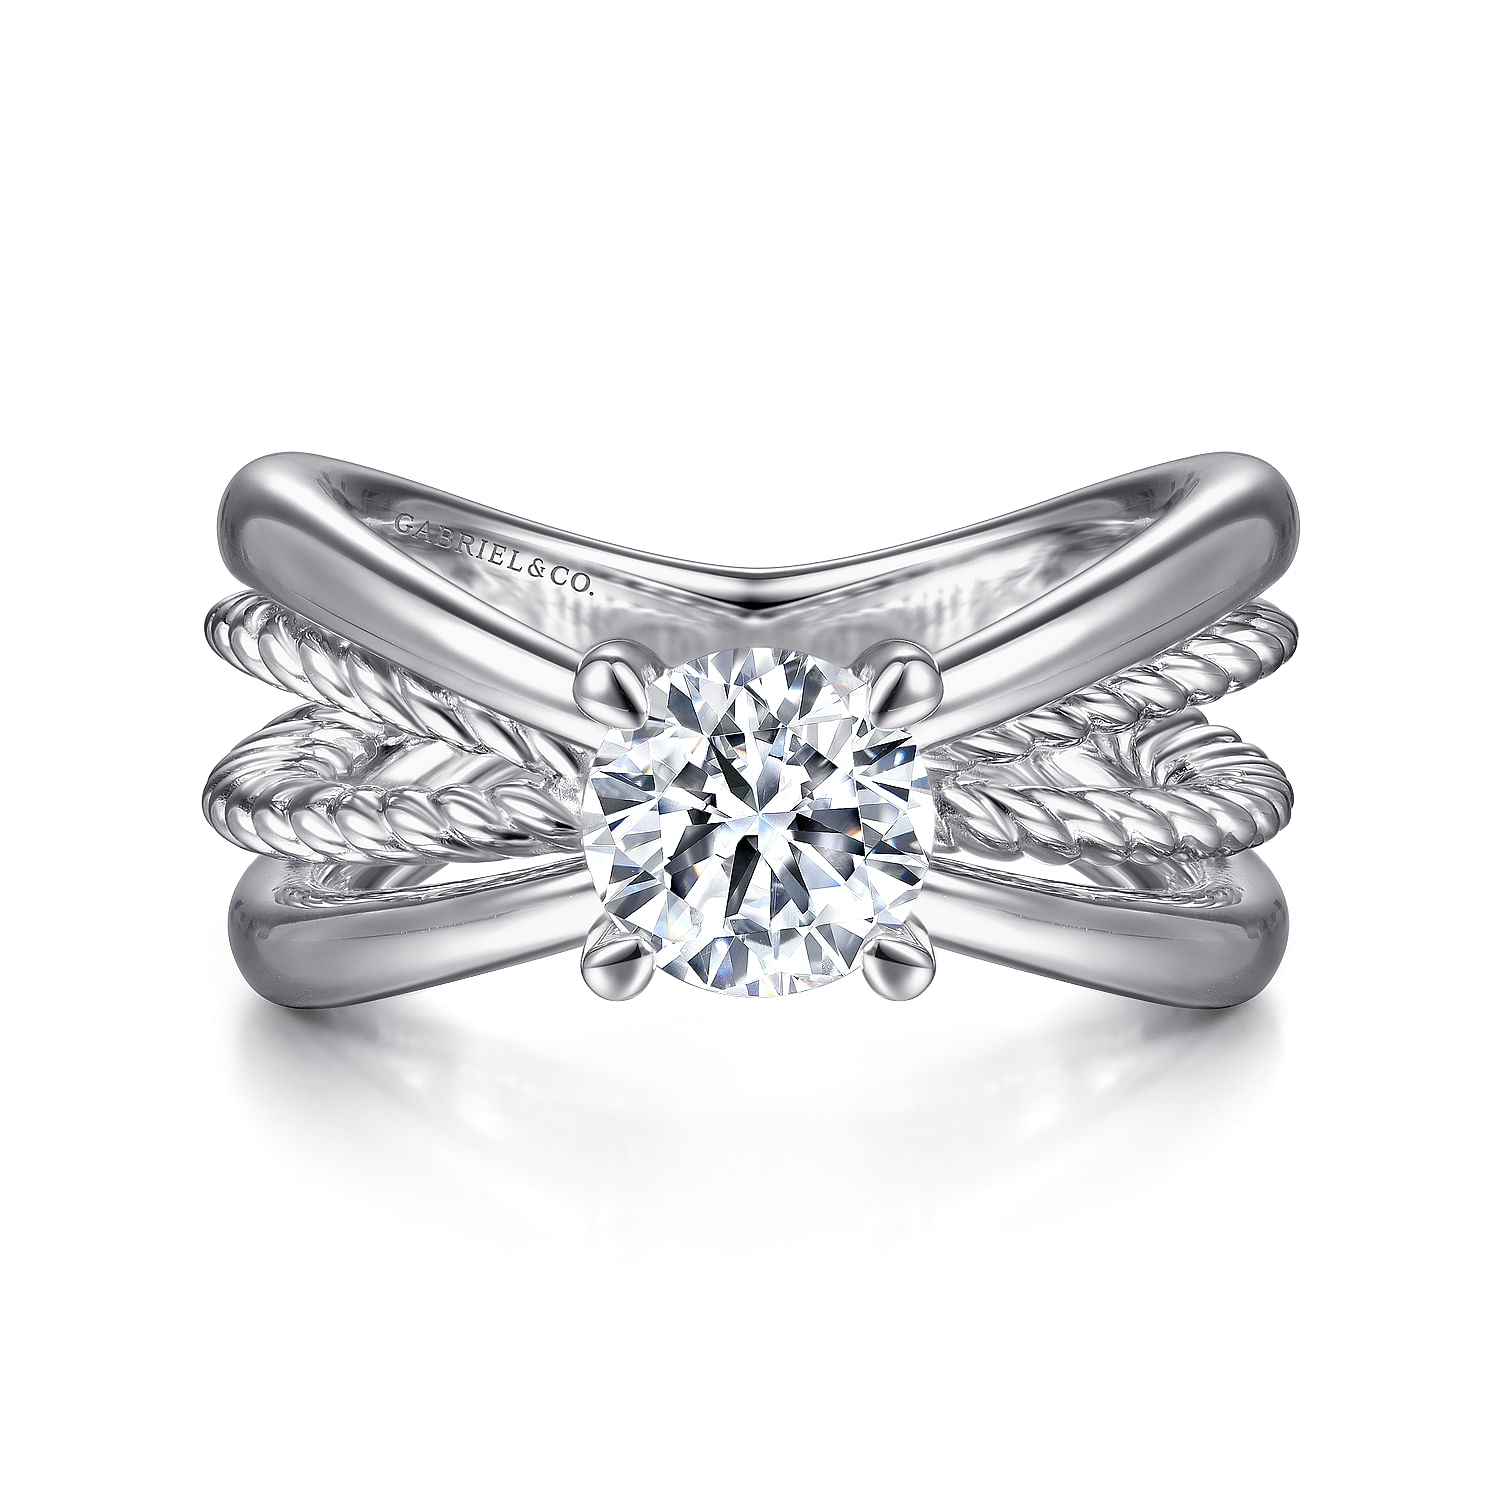 Gabriel - 14K White Gold Split Shank Round Diamond Engagement Ring